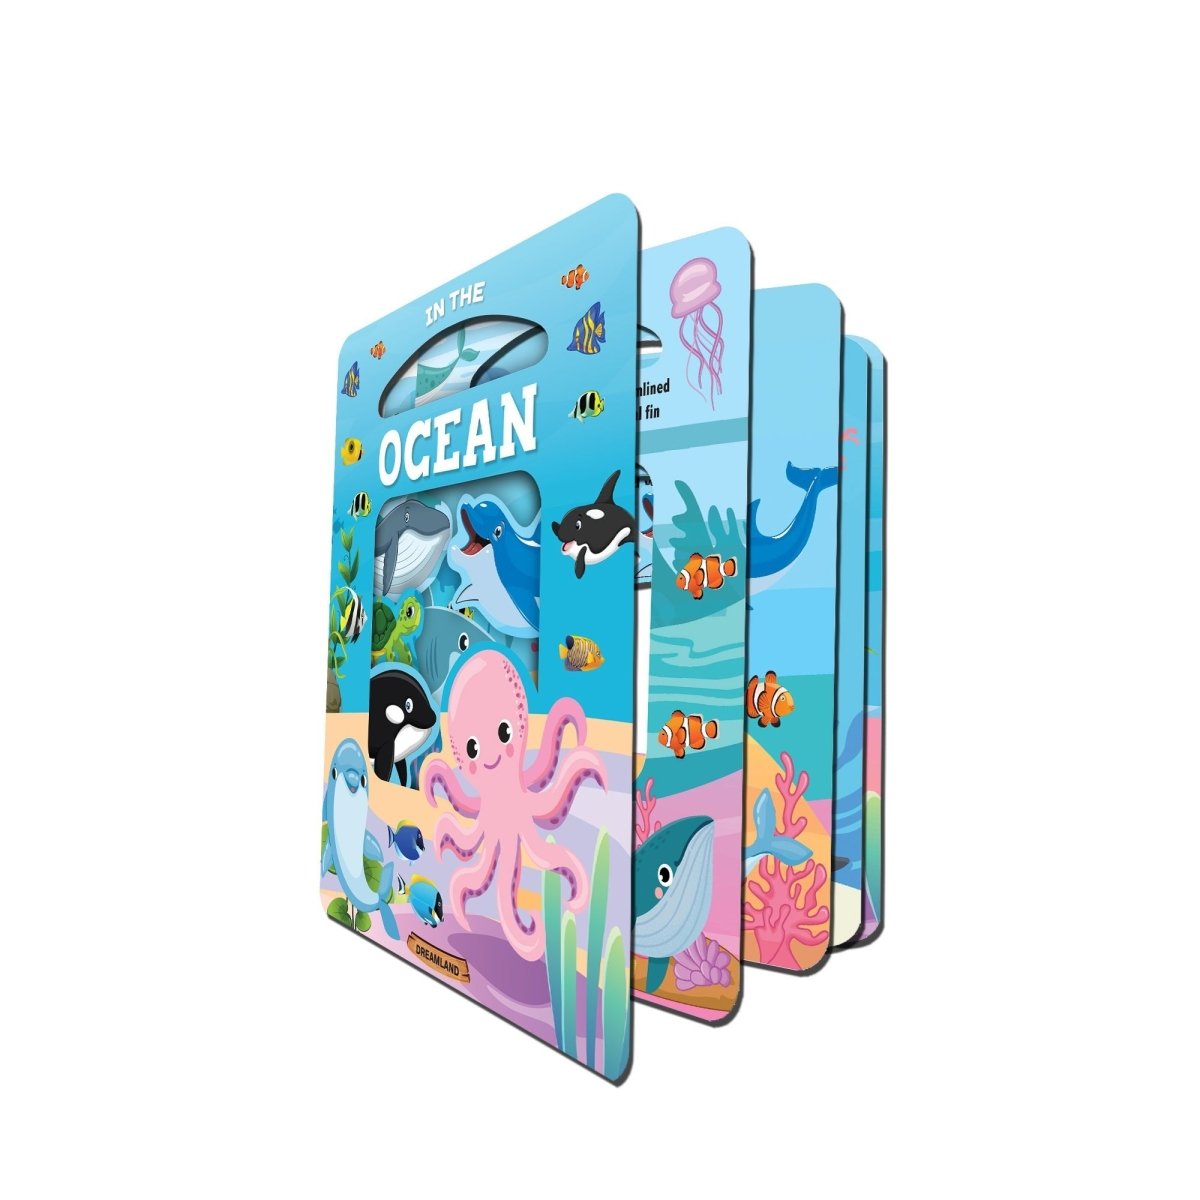 Dreamland Publications Die Cut Window Board Book- In The Ocean Picture Book - 9788196034887